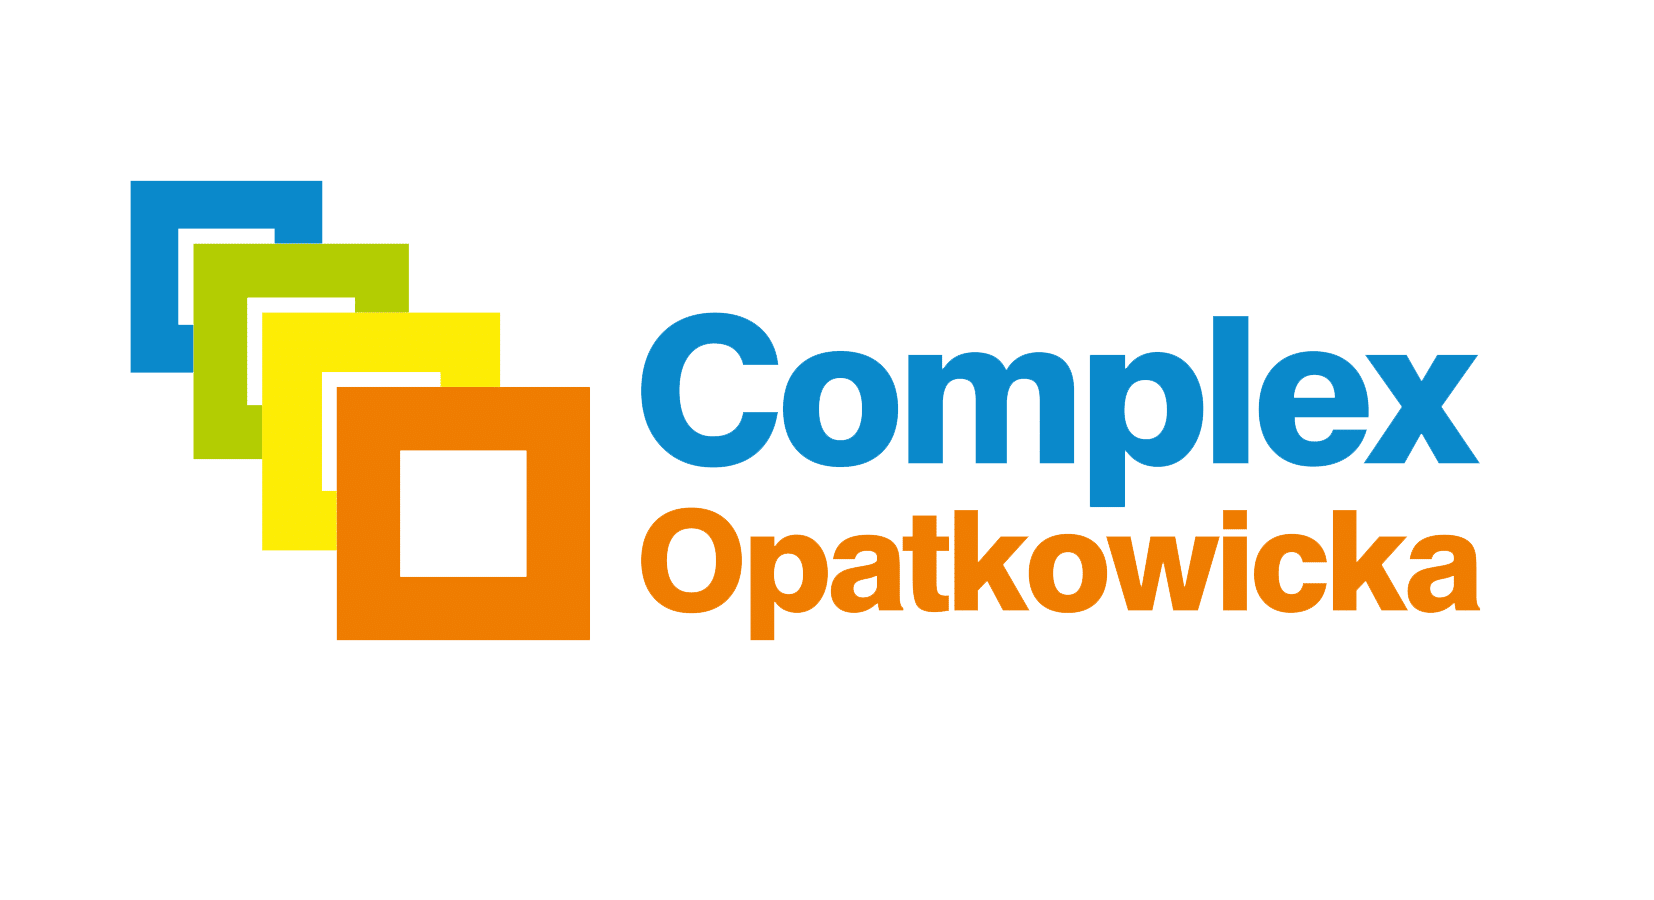 Complex Opatkowicka